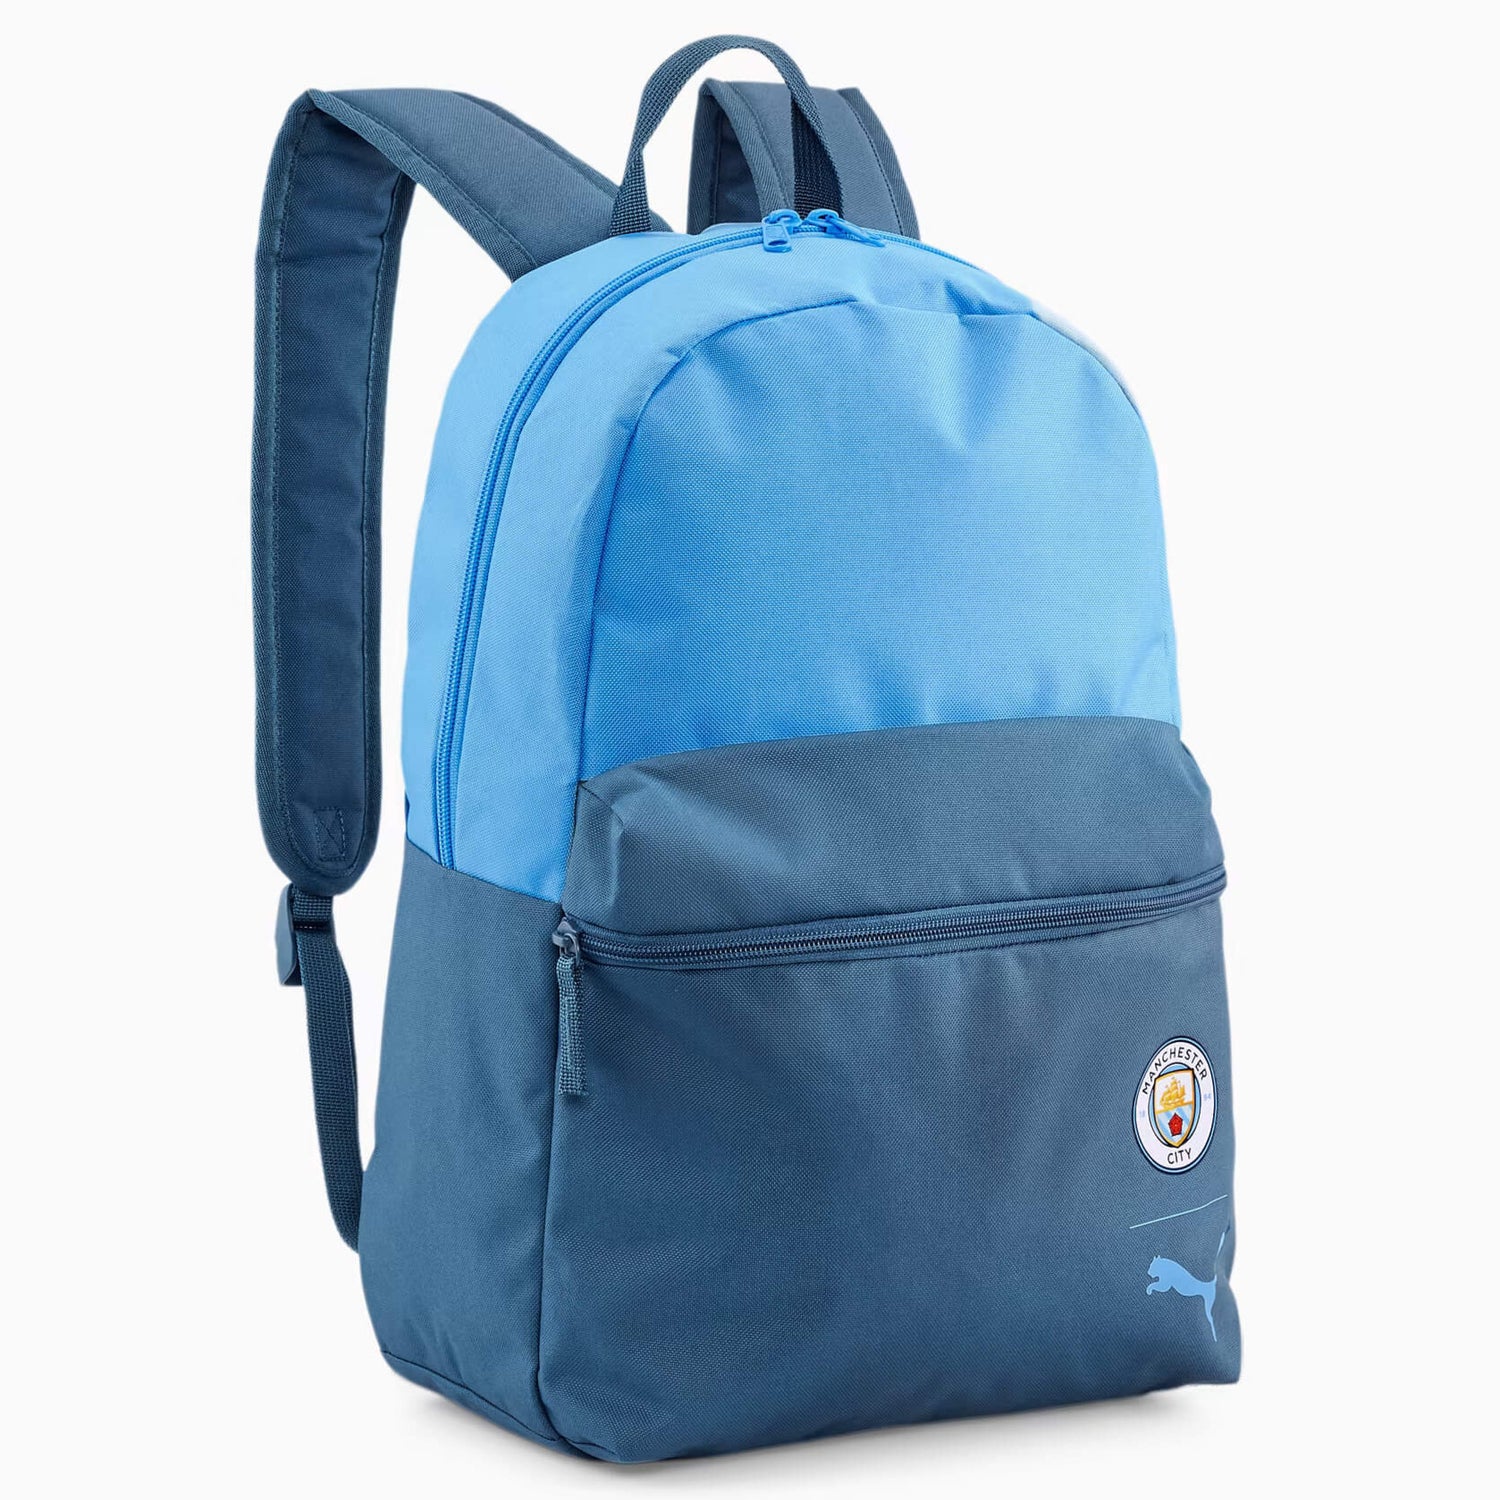 Paragon Laptop Backpack - Protecta